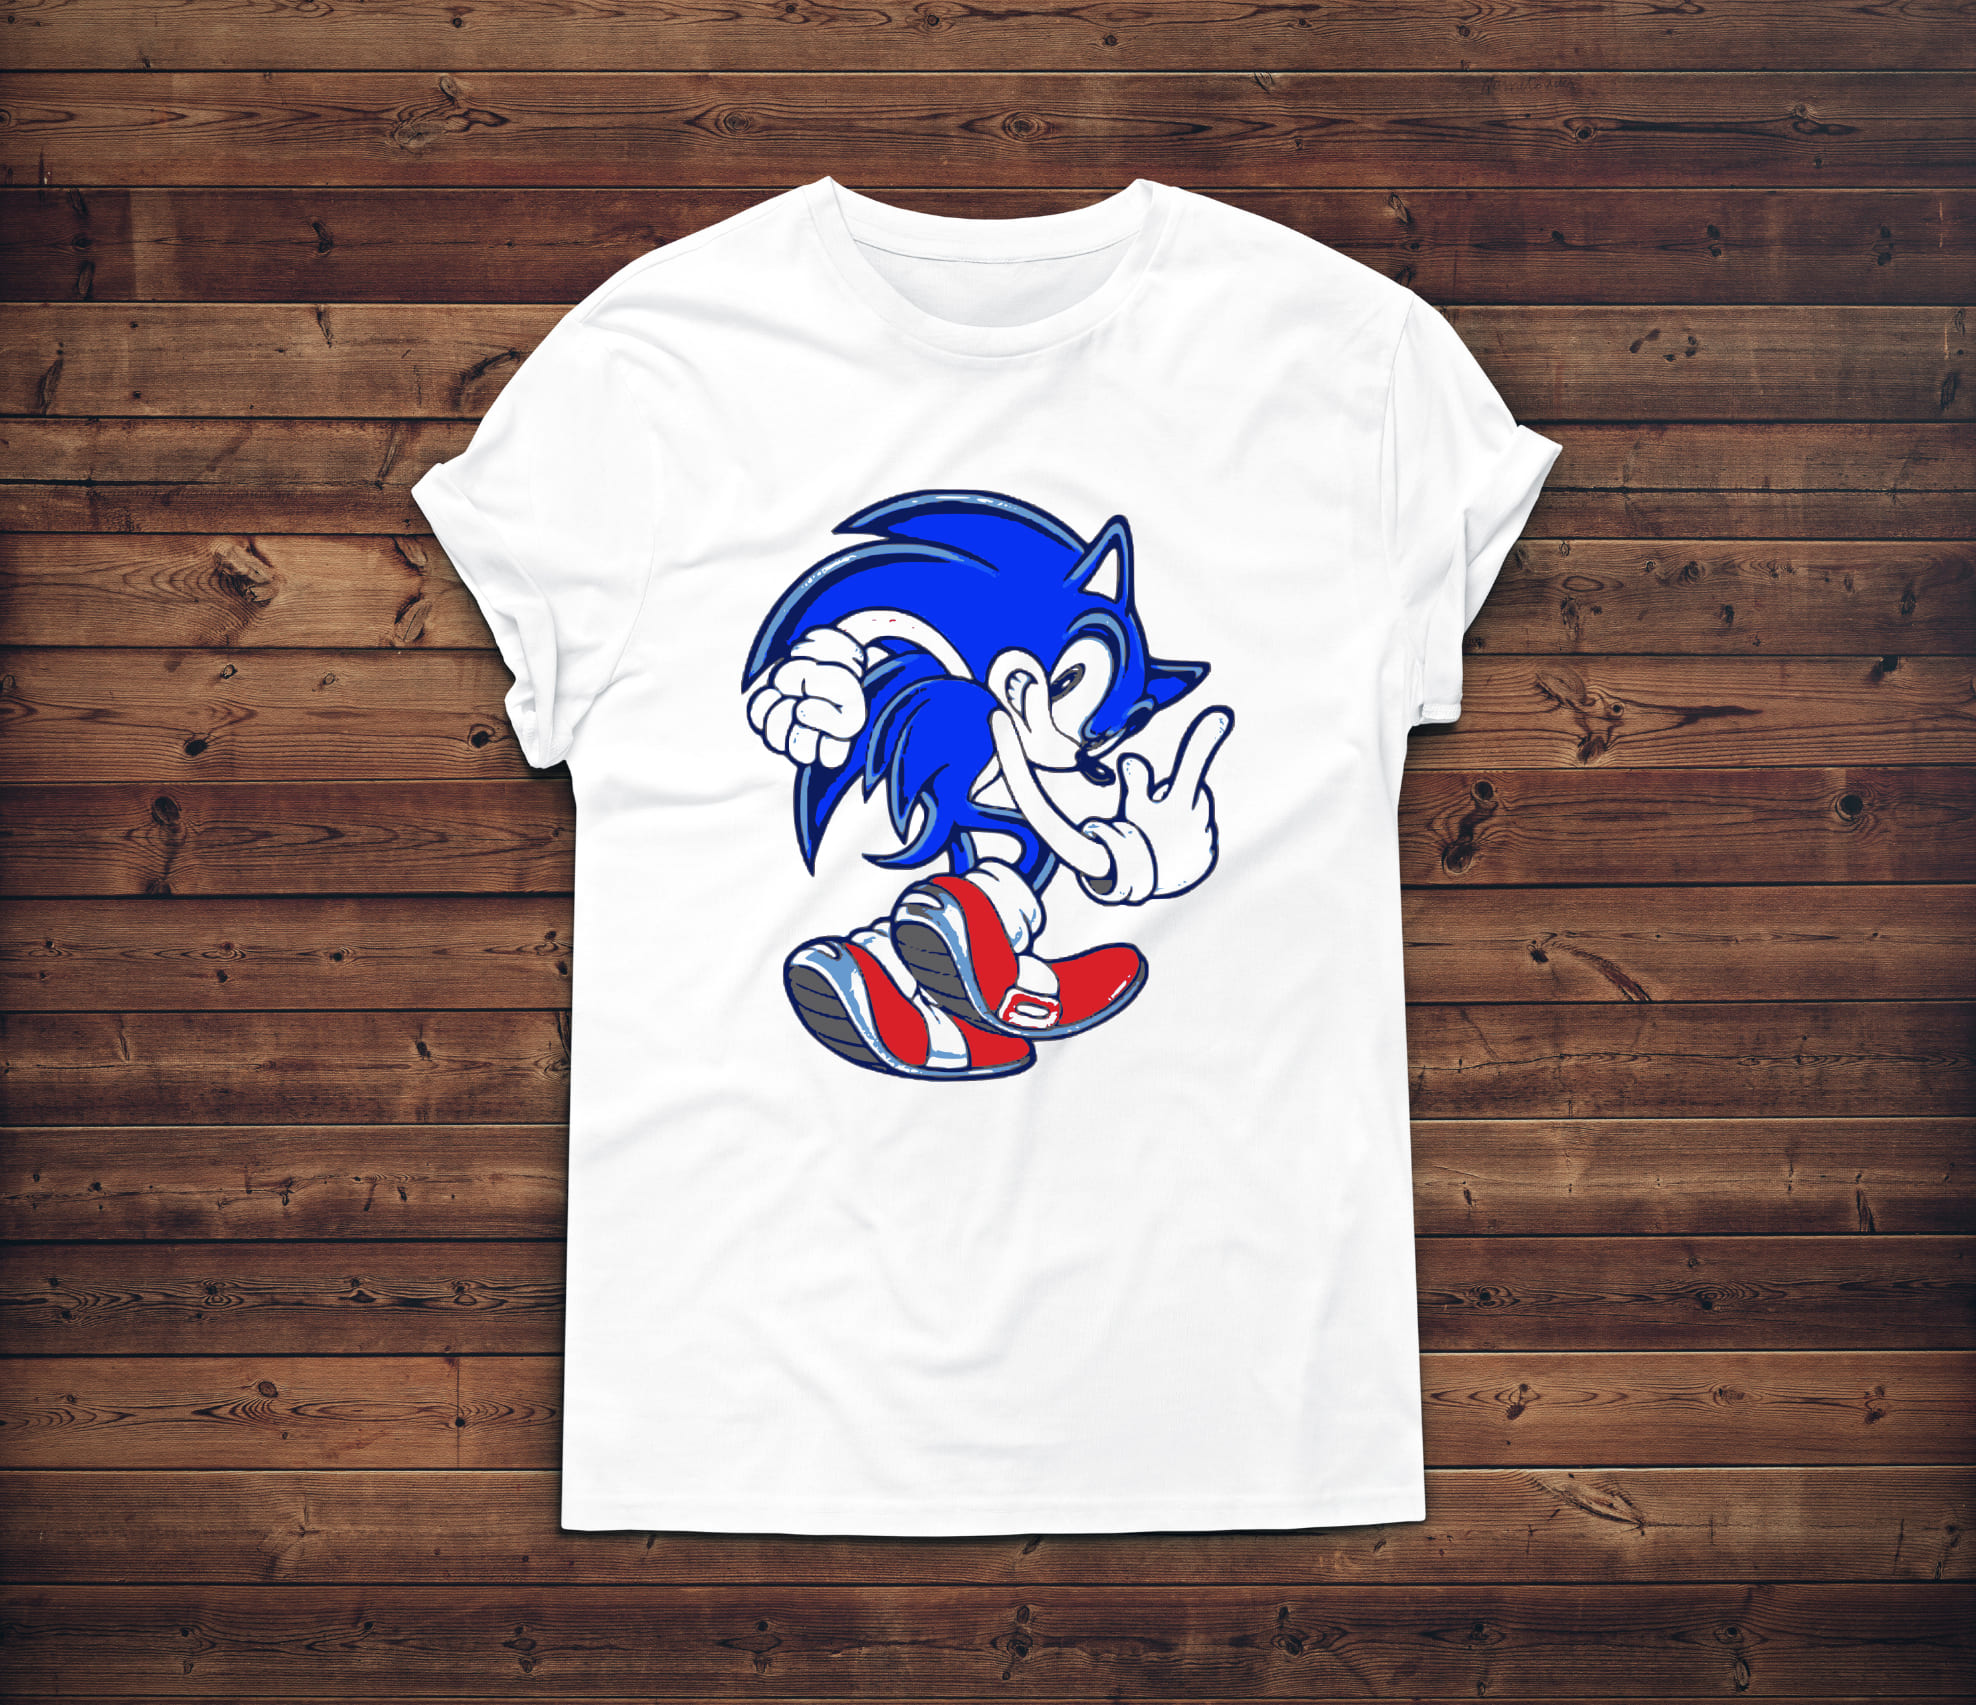 Happy sonic hedgehog on the t-shirt.